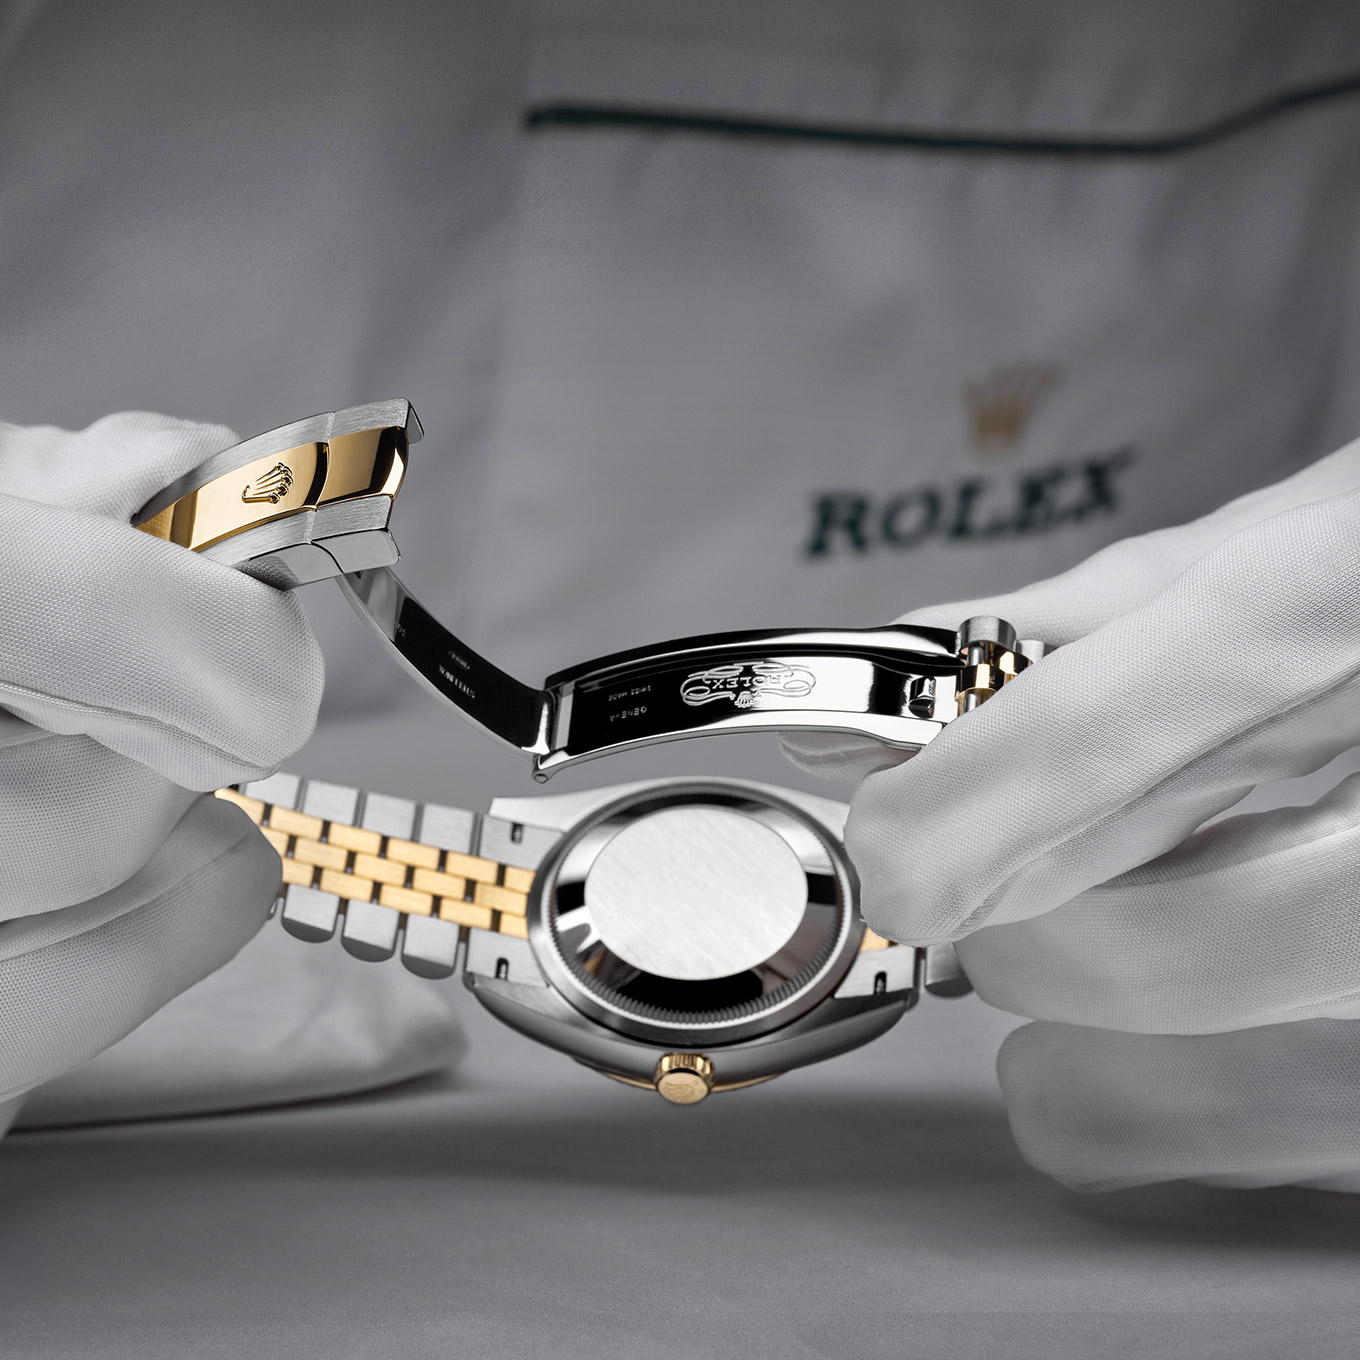 The Rolex servicing procedure